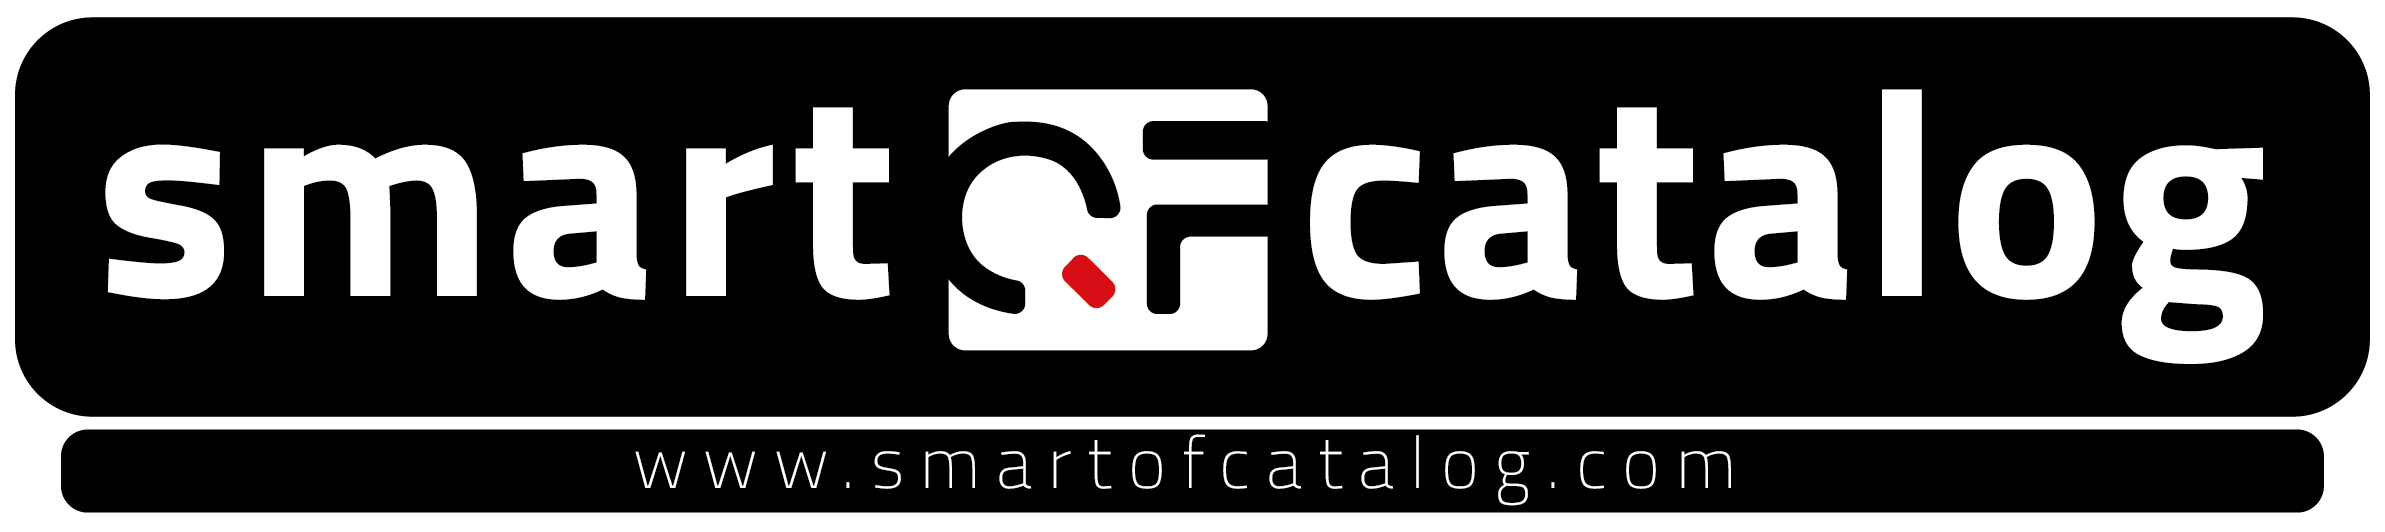 Smart Of Catalog Logo